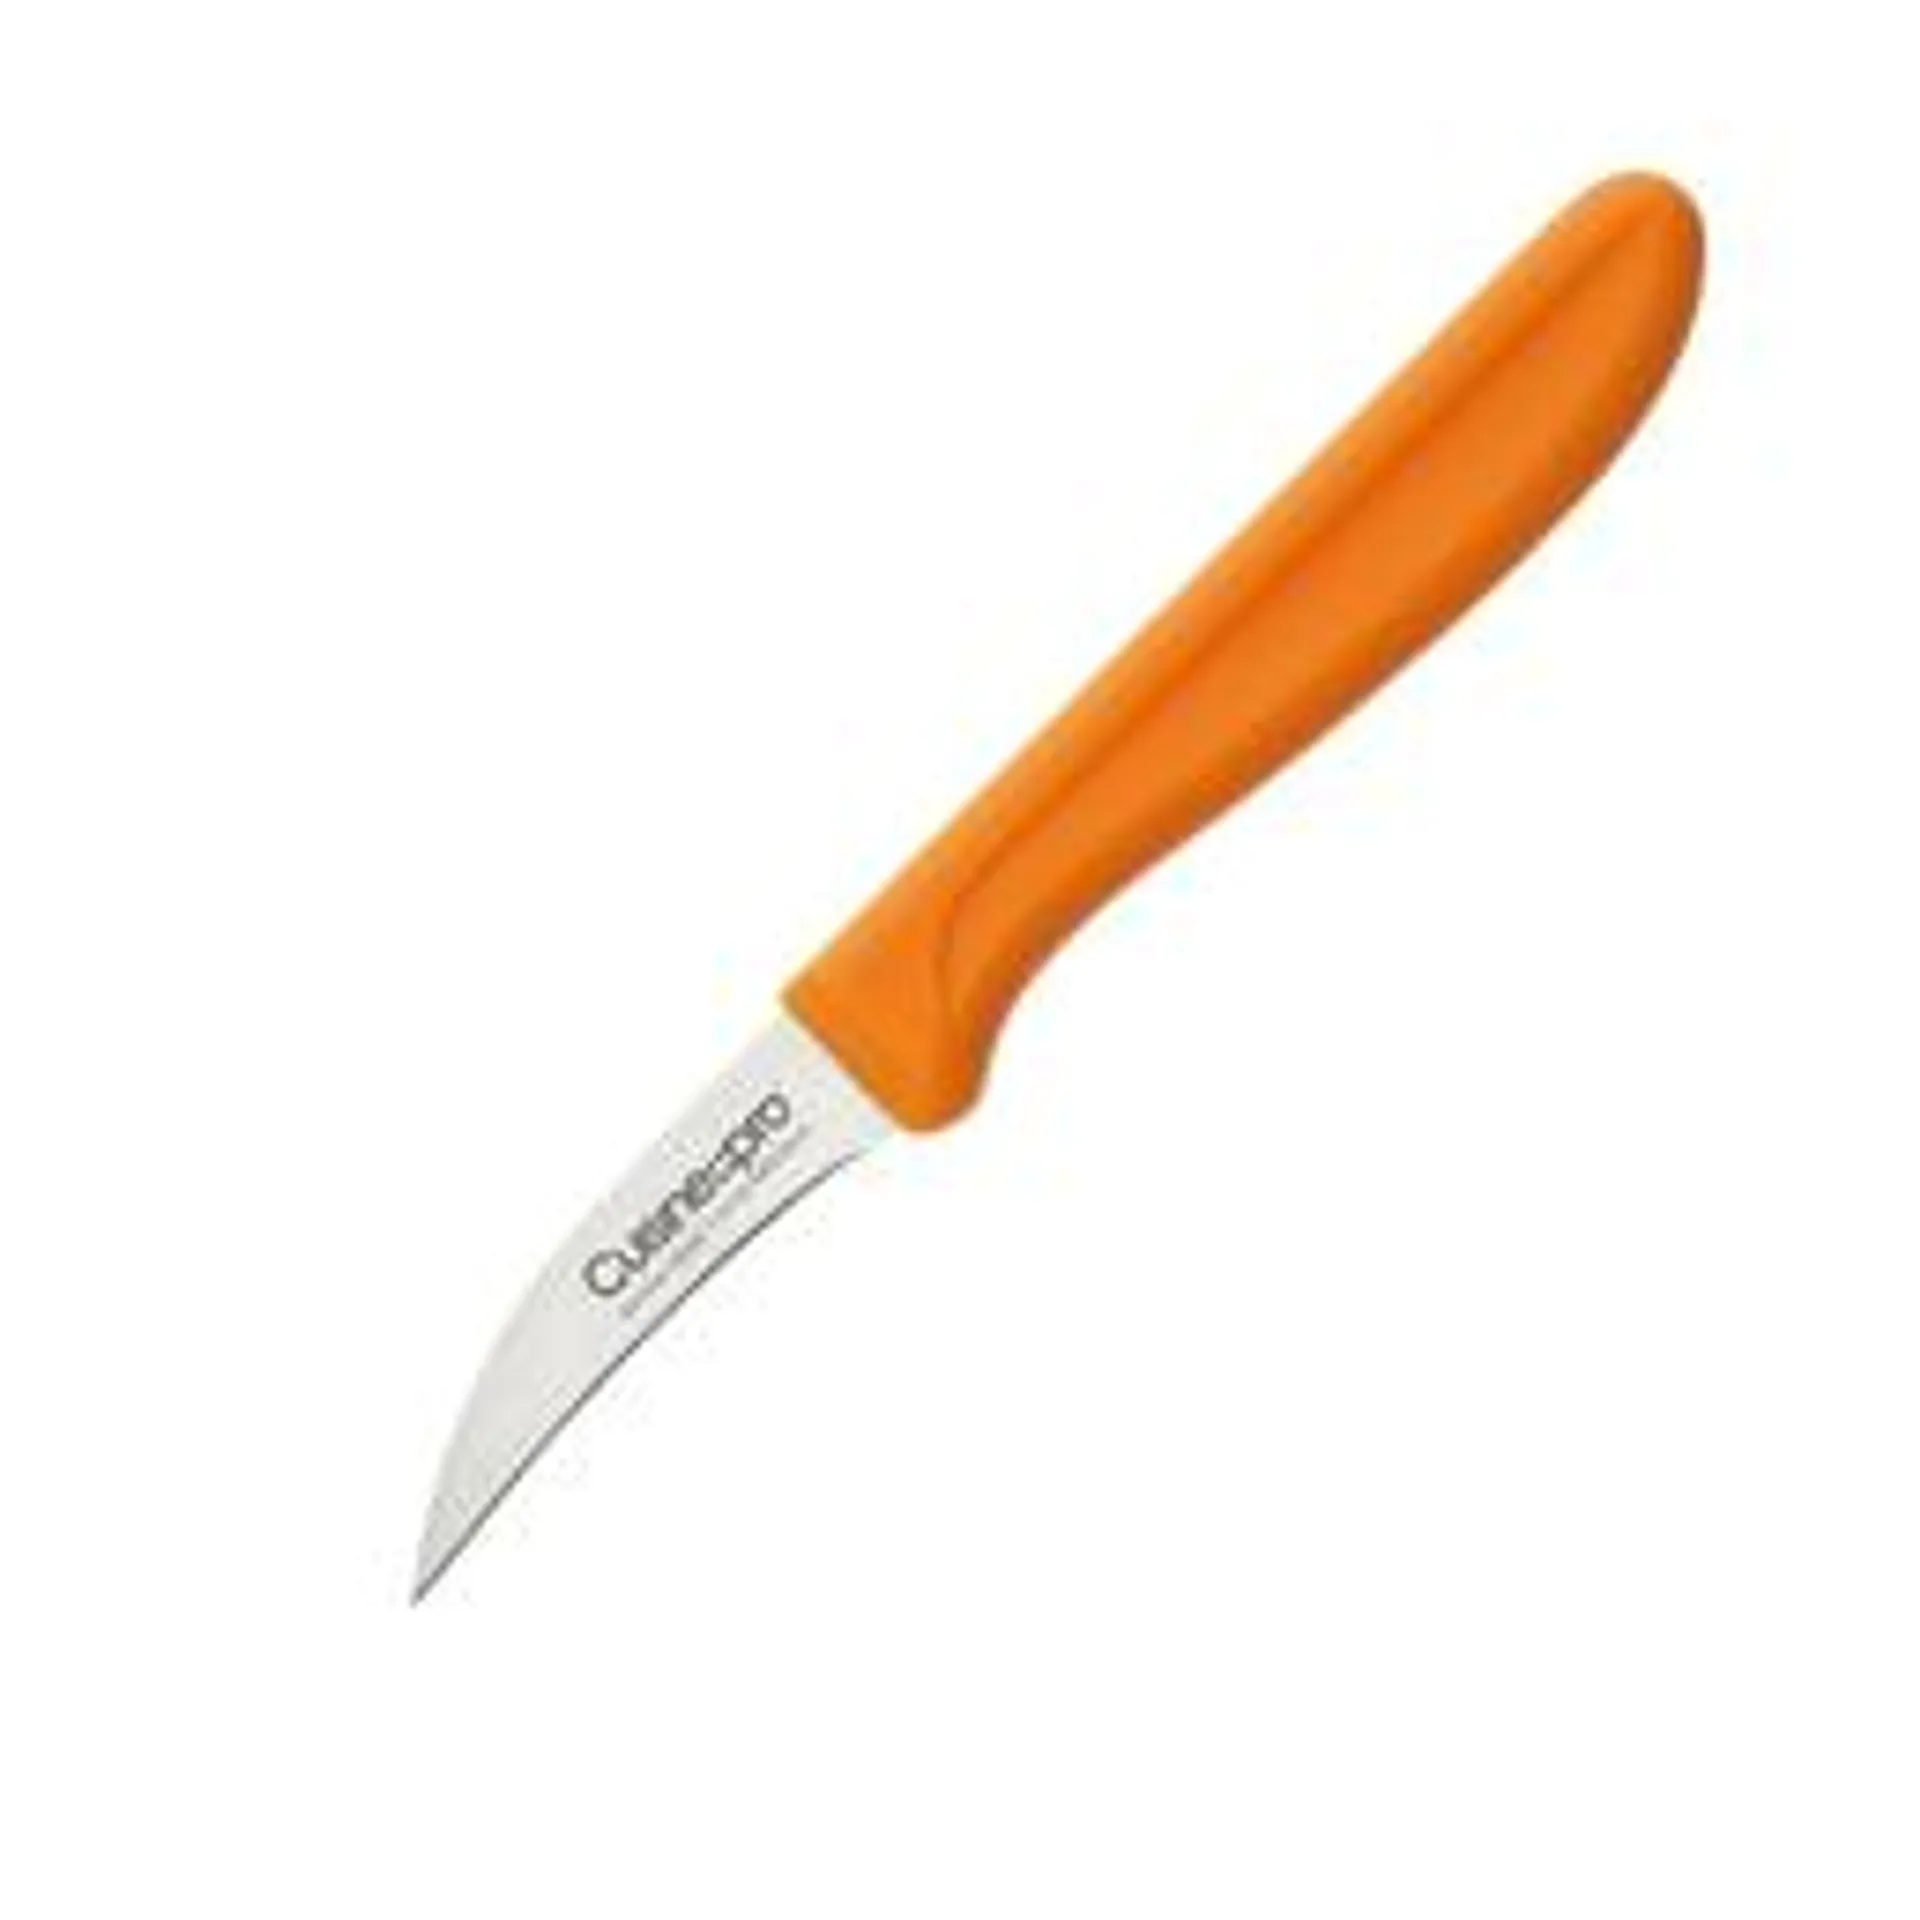 Cuisine::pro Classic Peeling Knife, Orange, 7cm